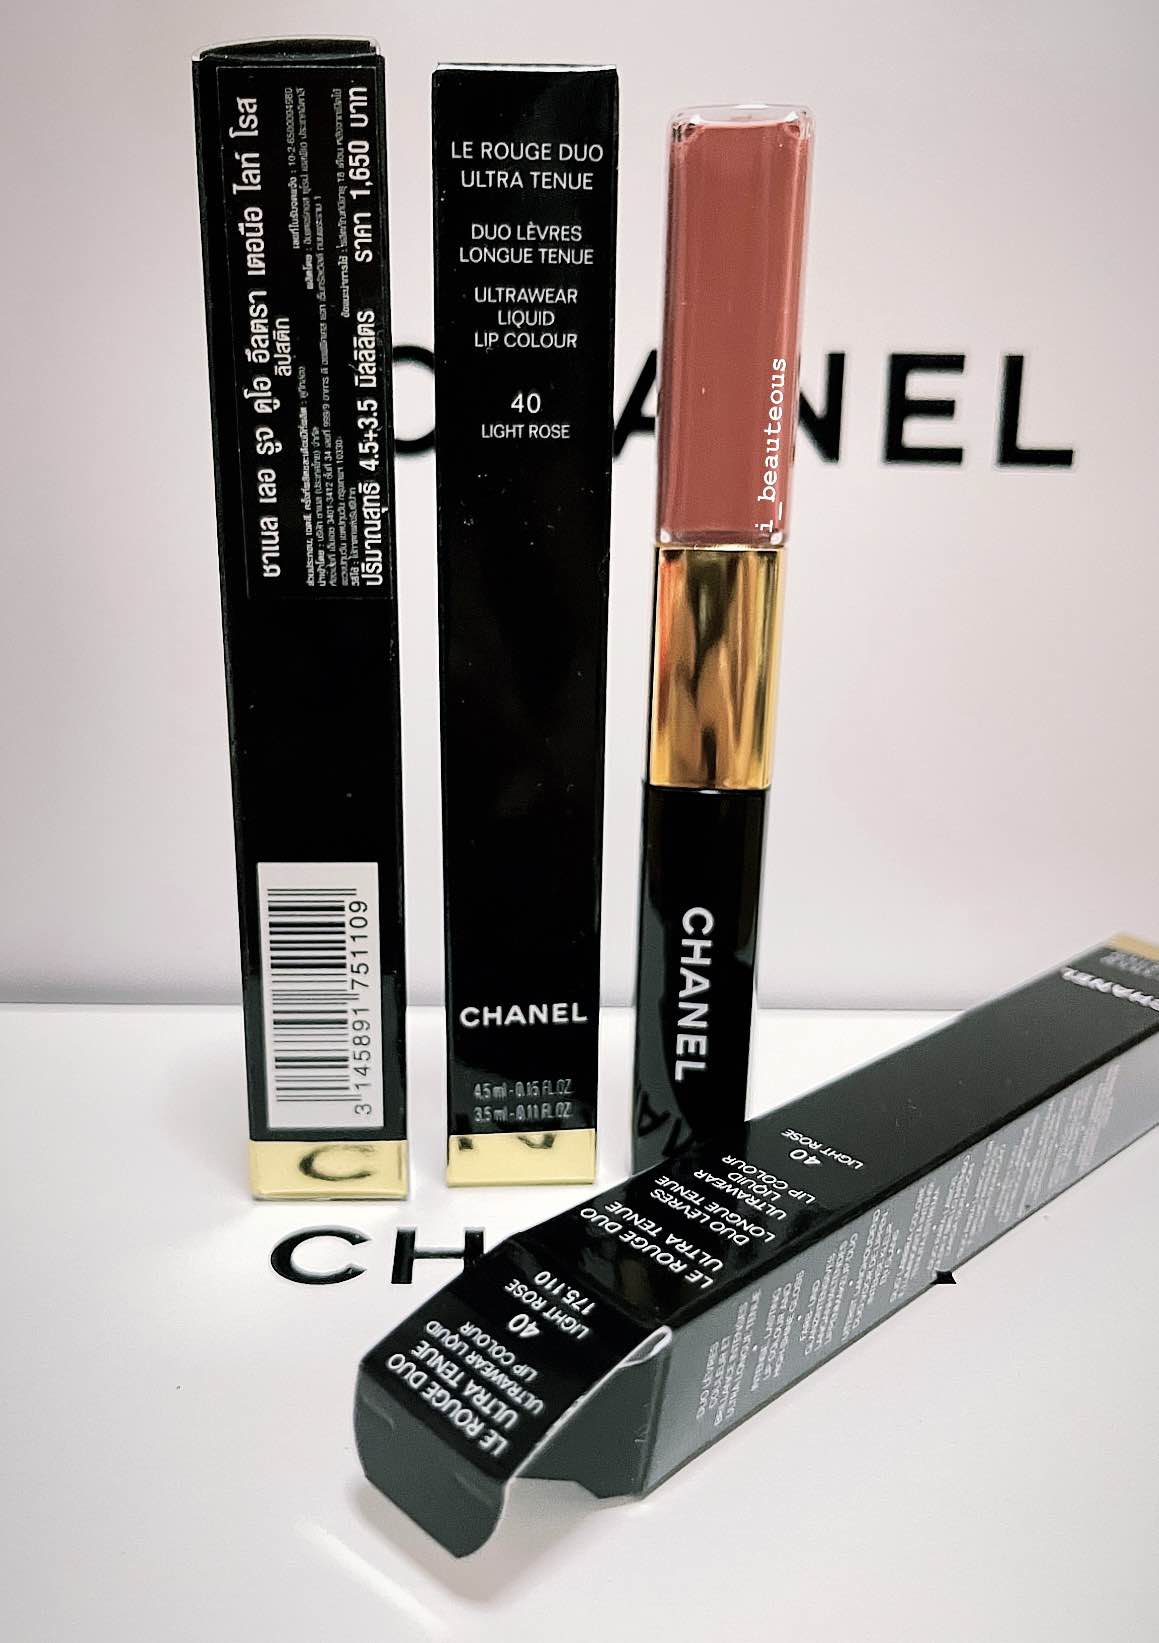 Chanel Le Rouge Duo Liquid Lipstick, 40 Light Rose, 0.15 oz/45 mL